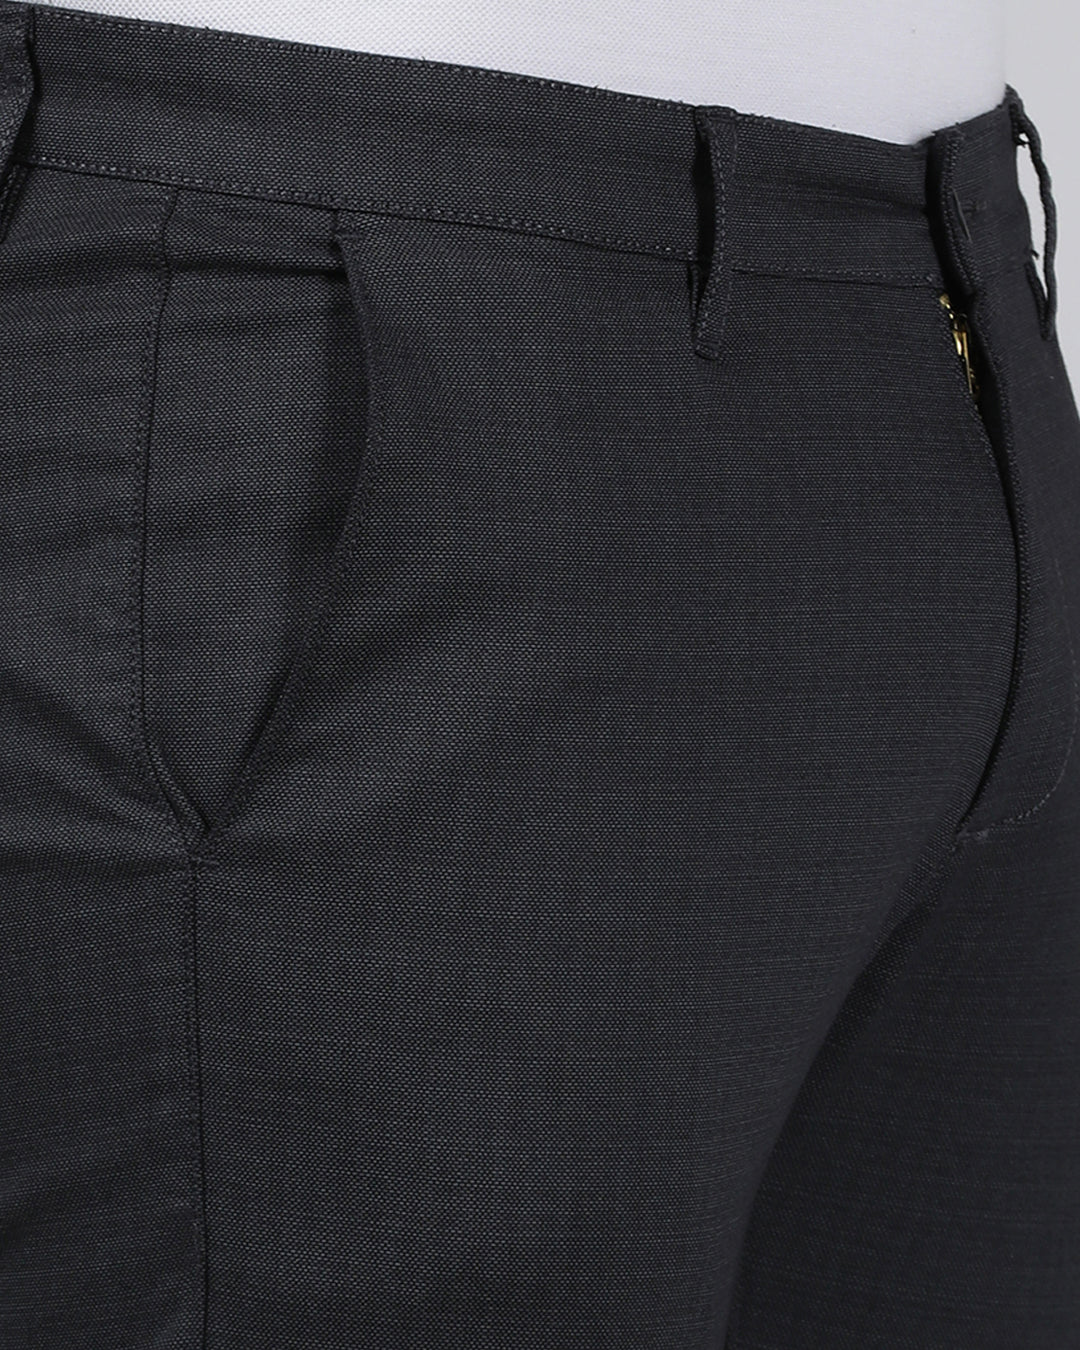 Casual Slim Fit Printed Black Trousers for Men